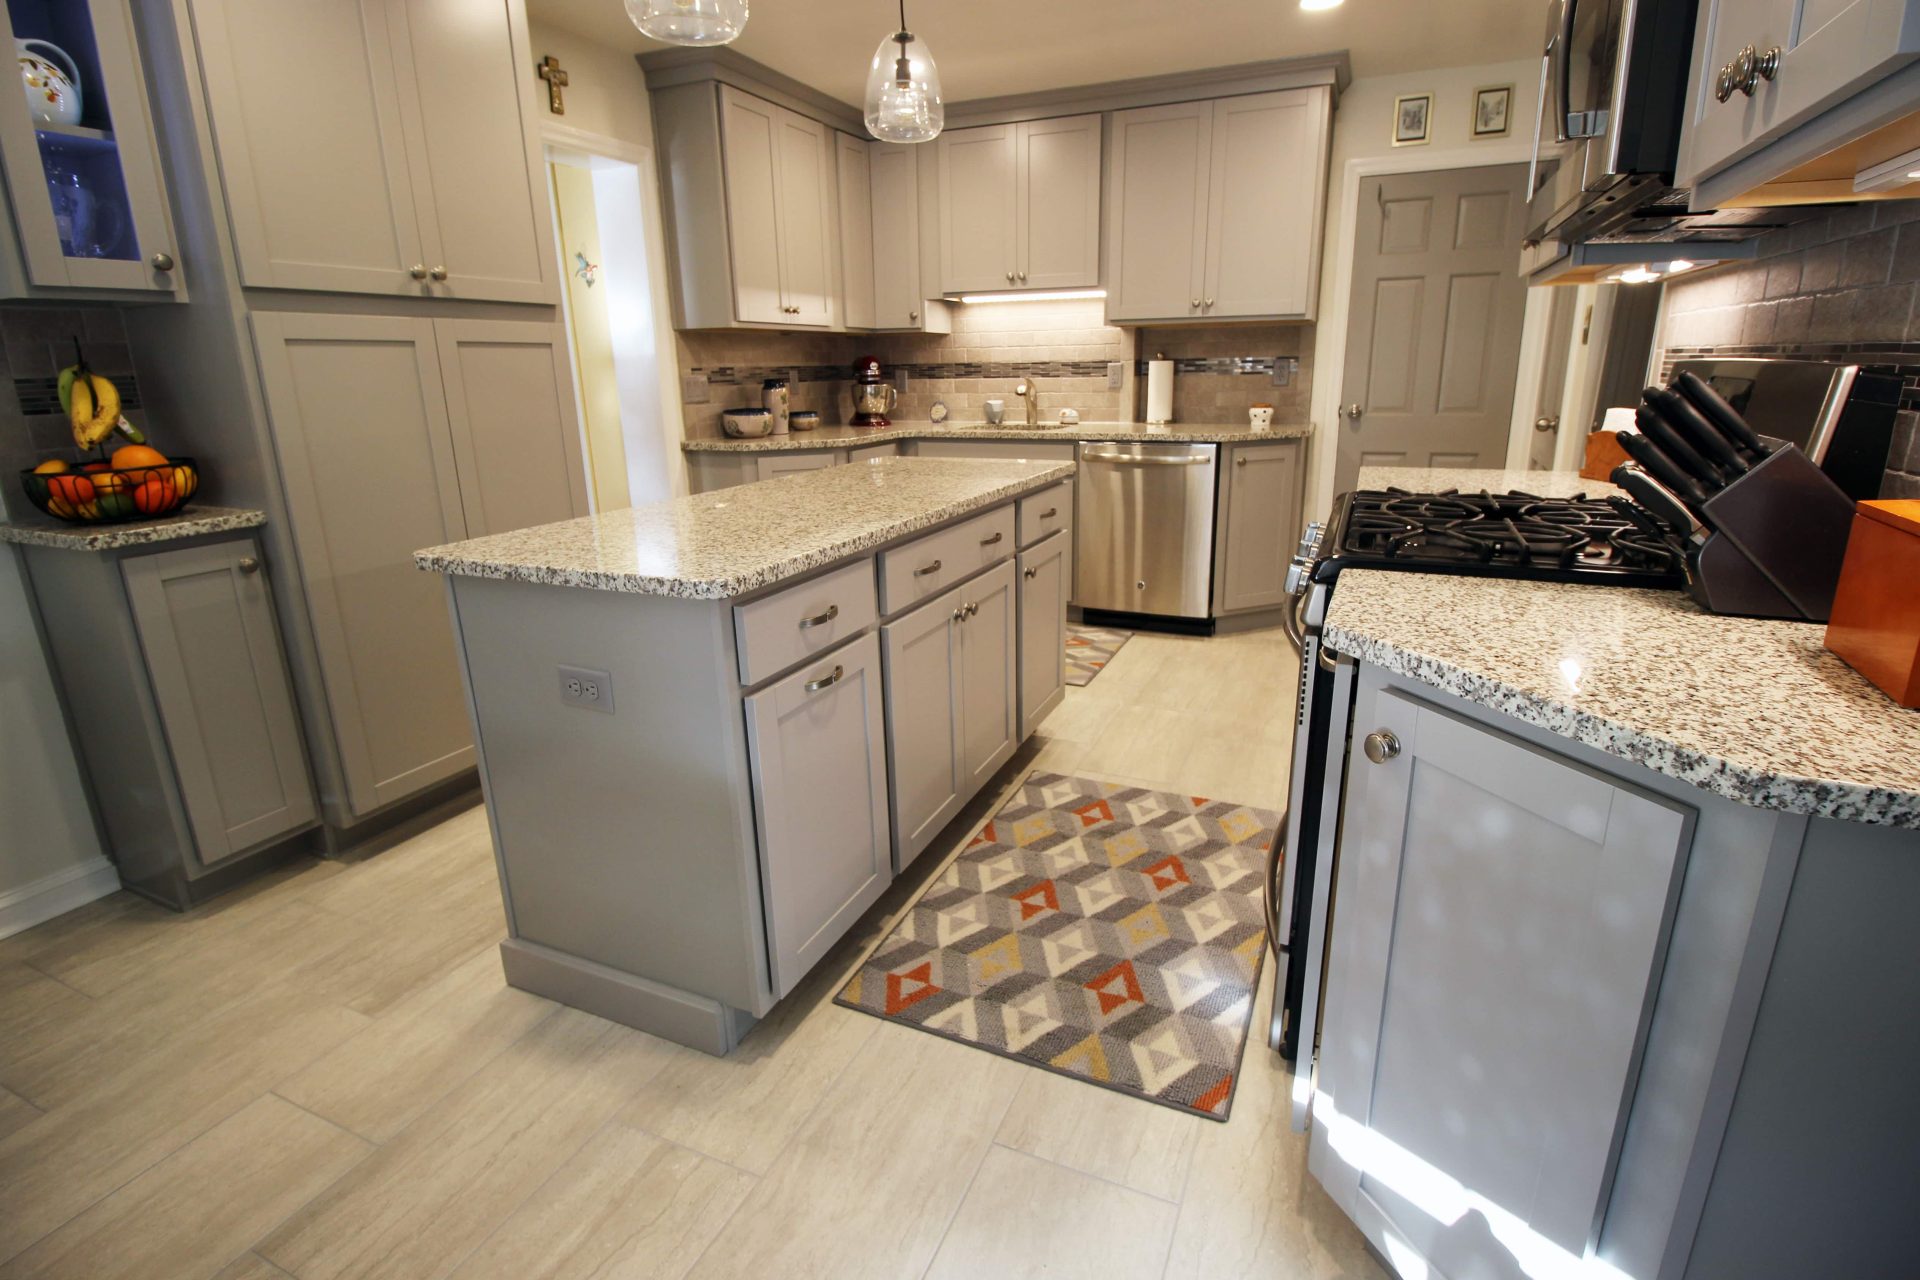 Renovated whole grey kitchen